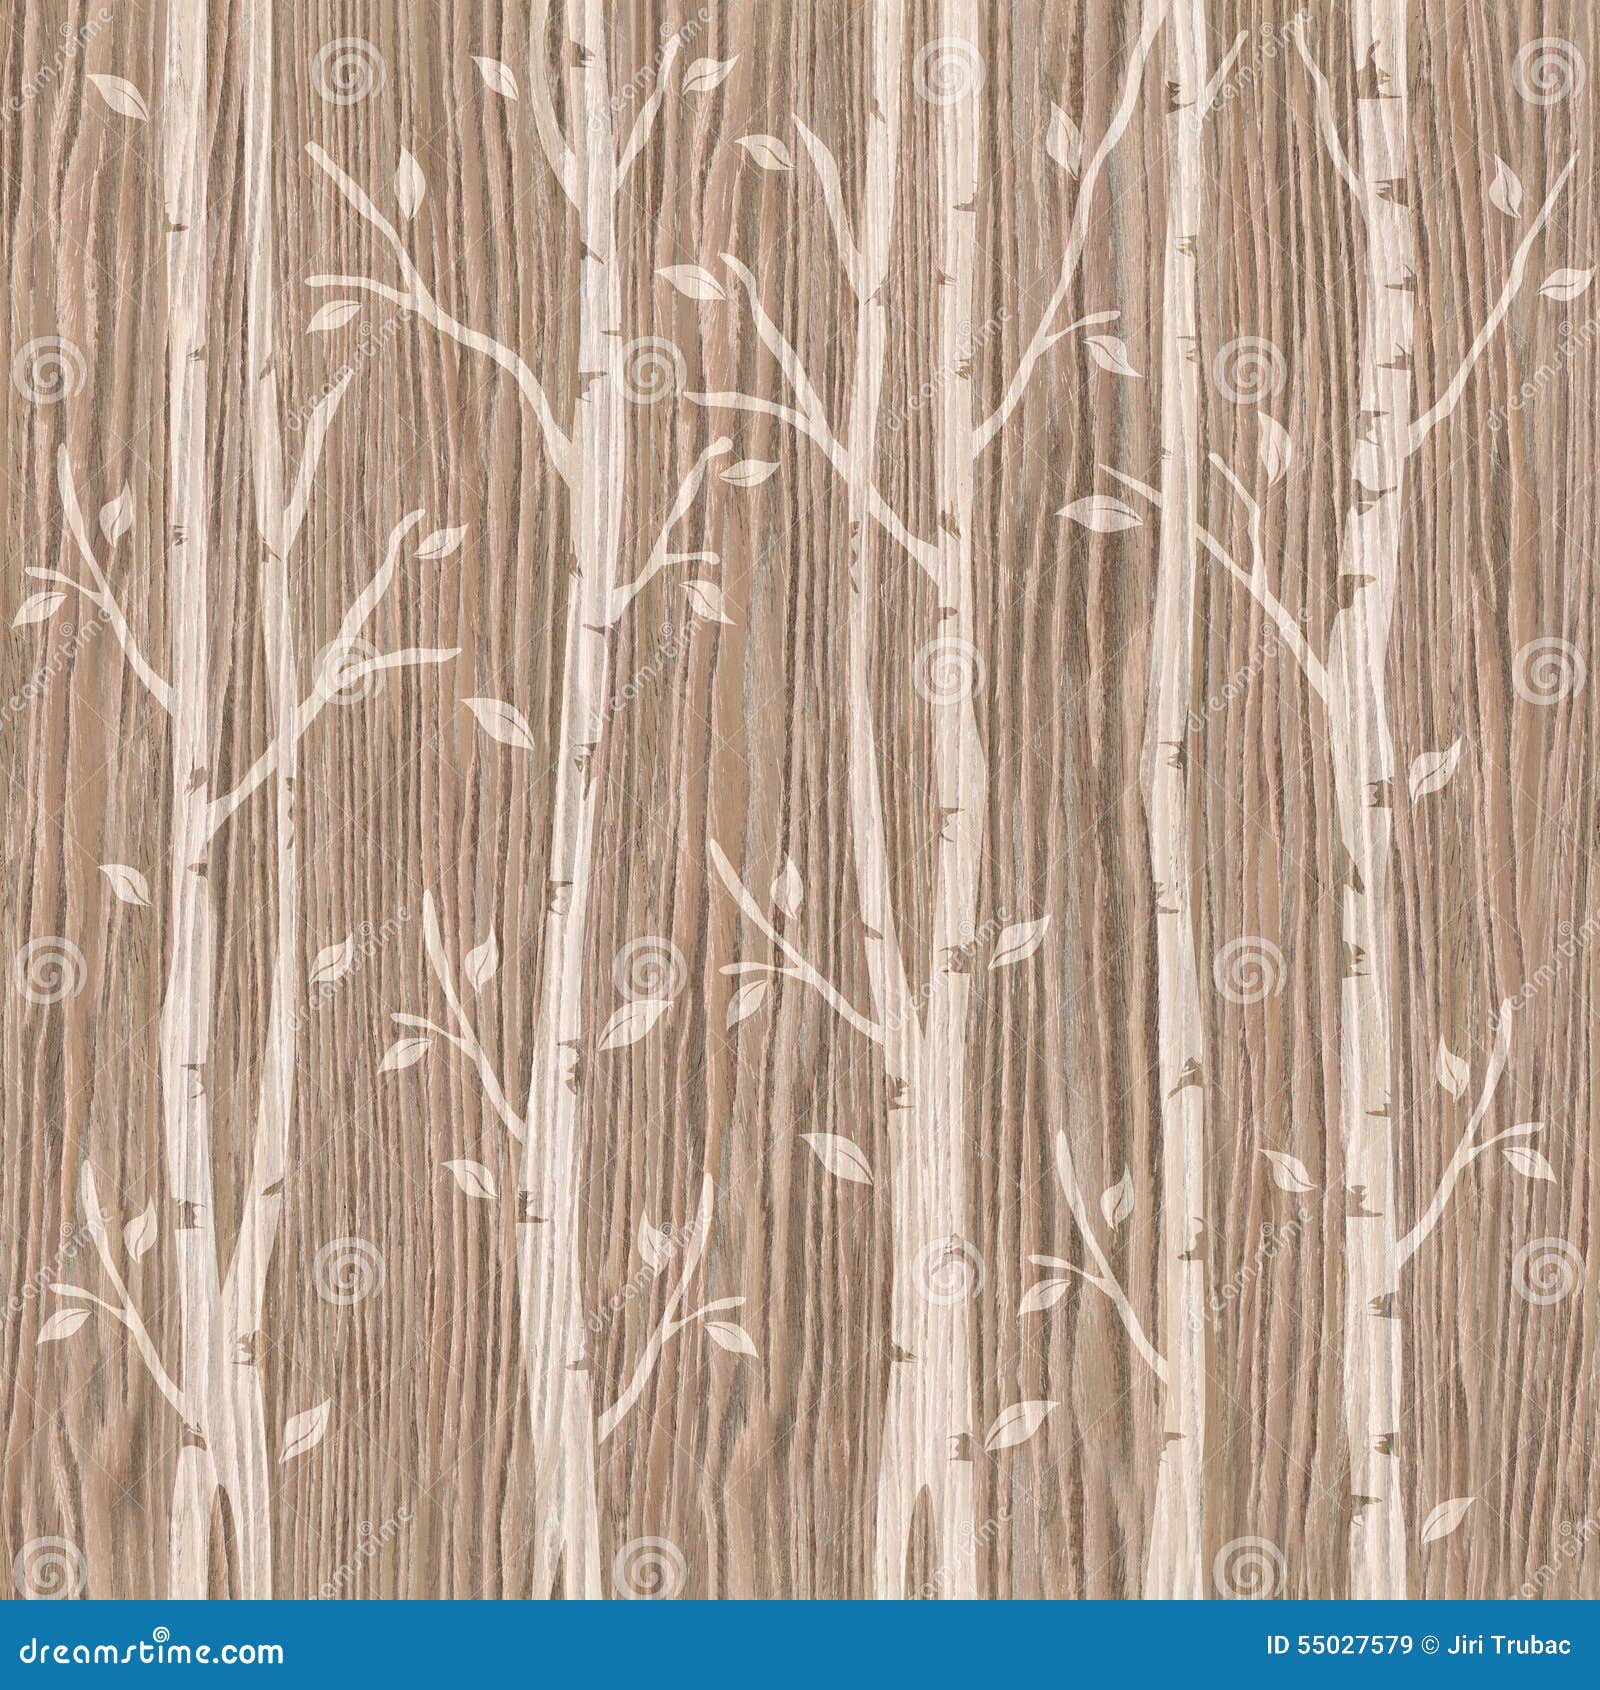 decorative trees on seamless background - blasted oak groove